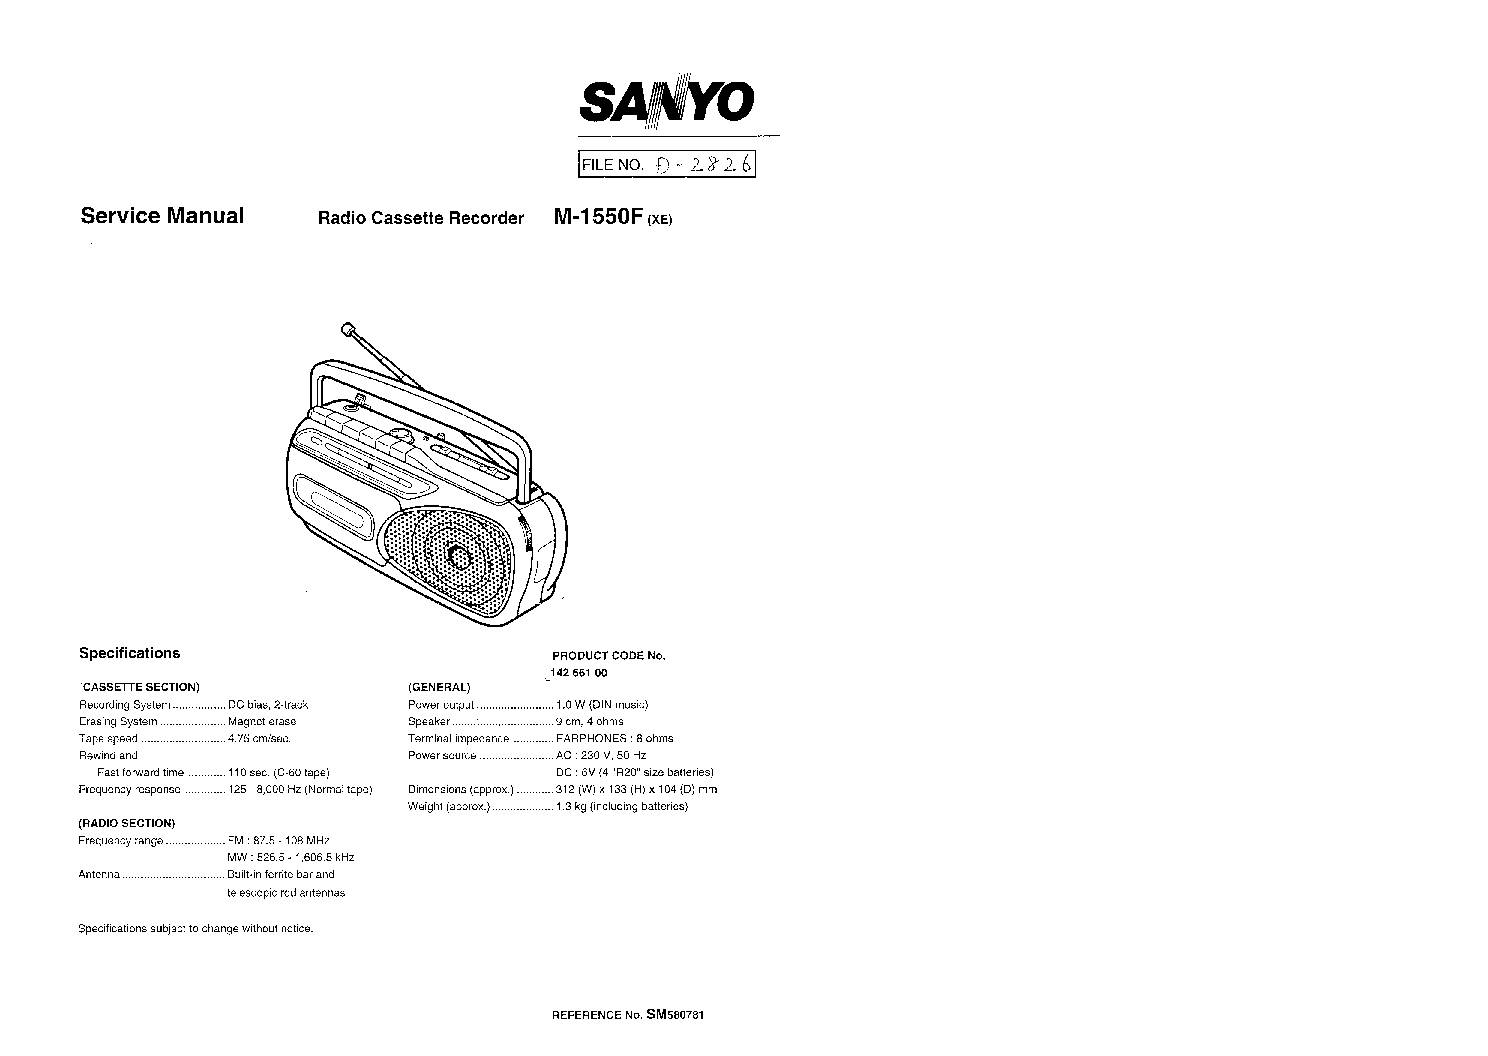 Sanyo M-1550F